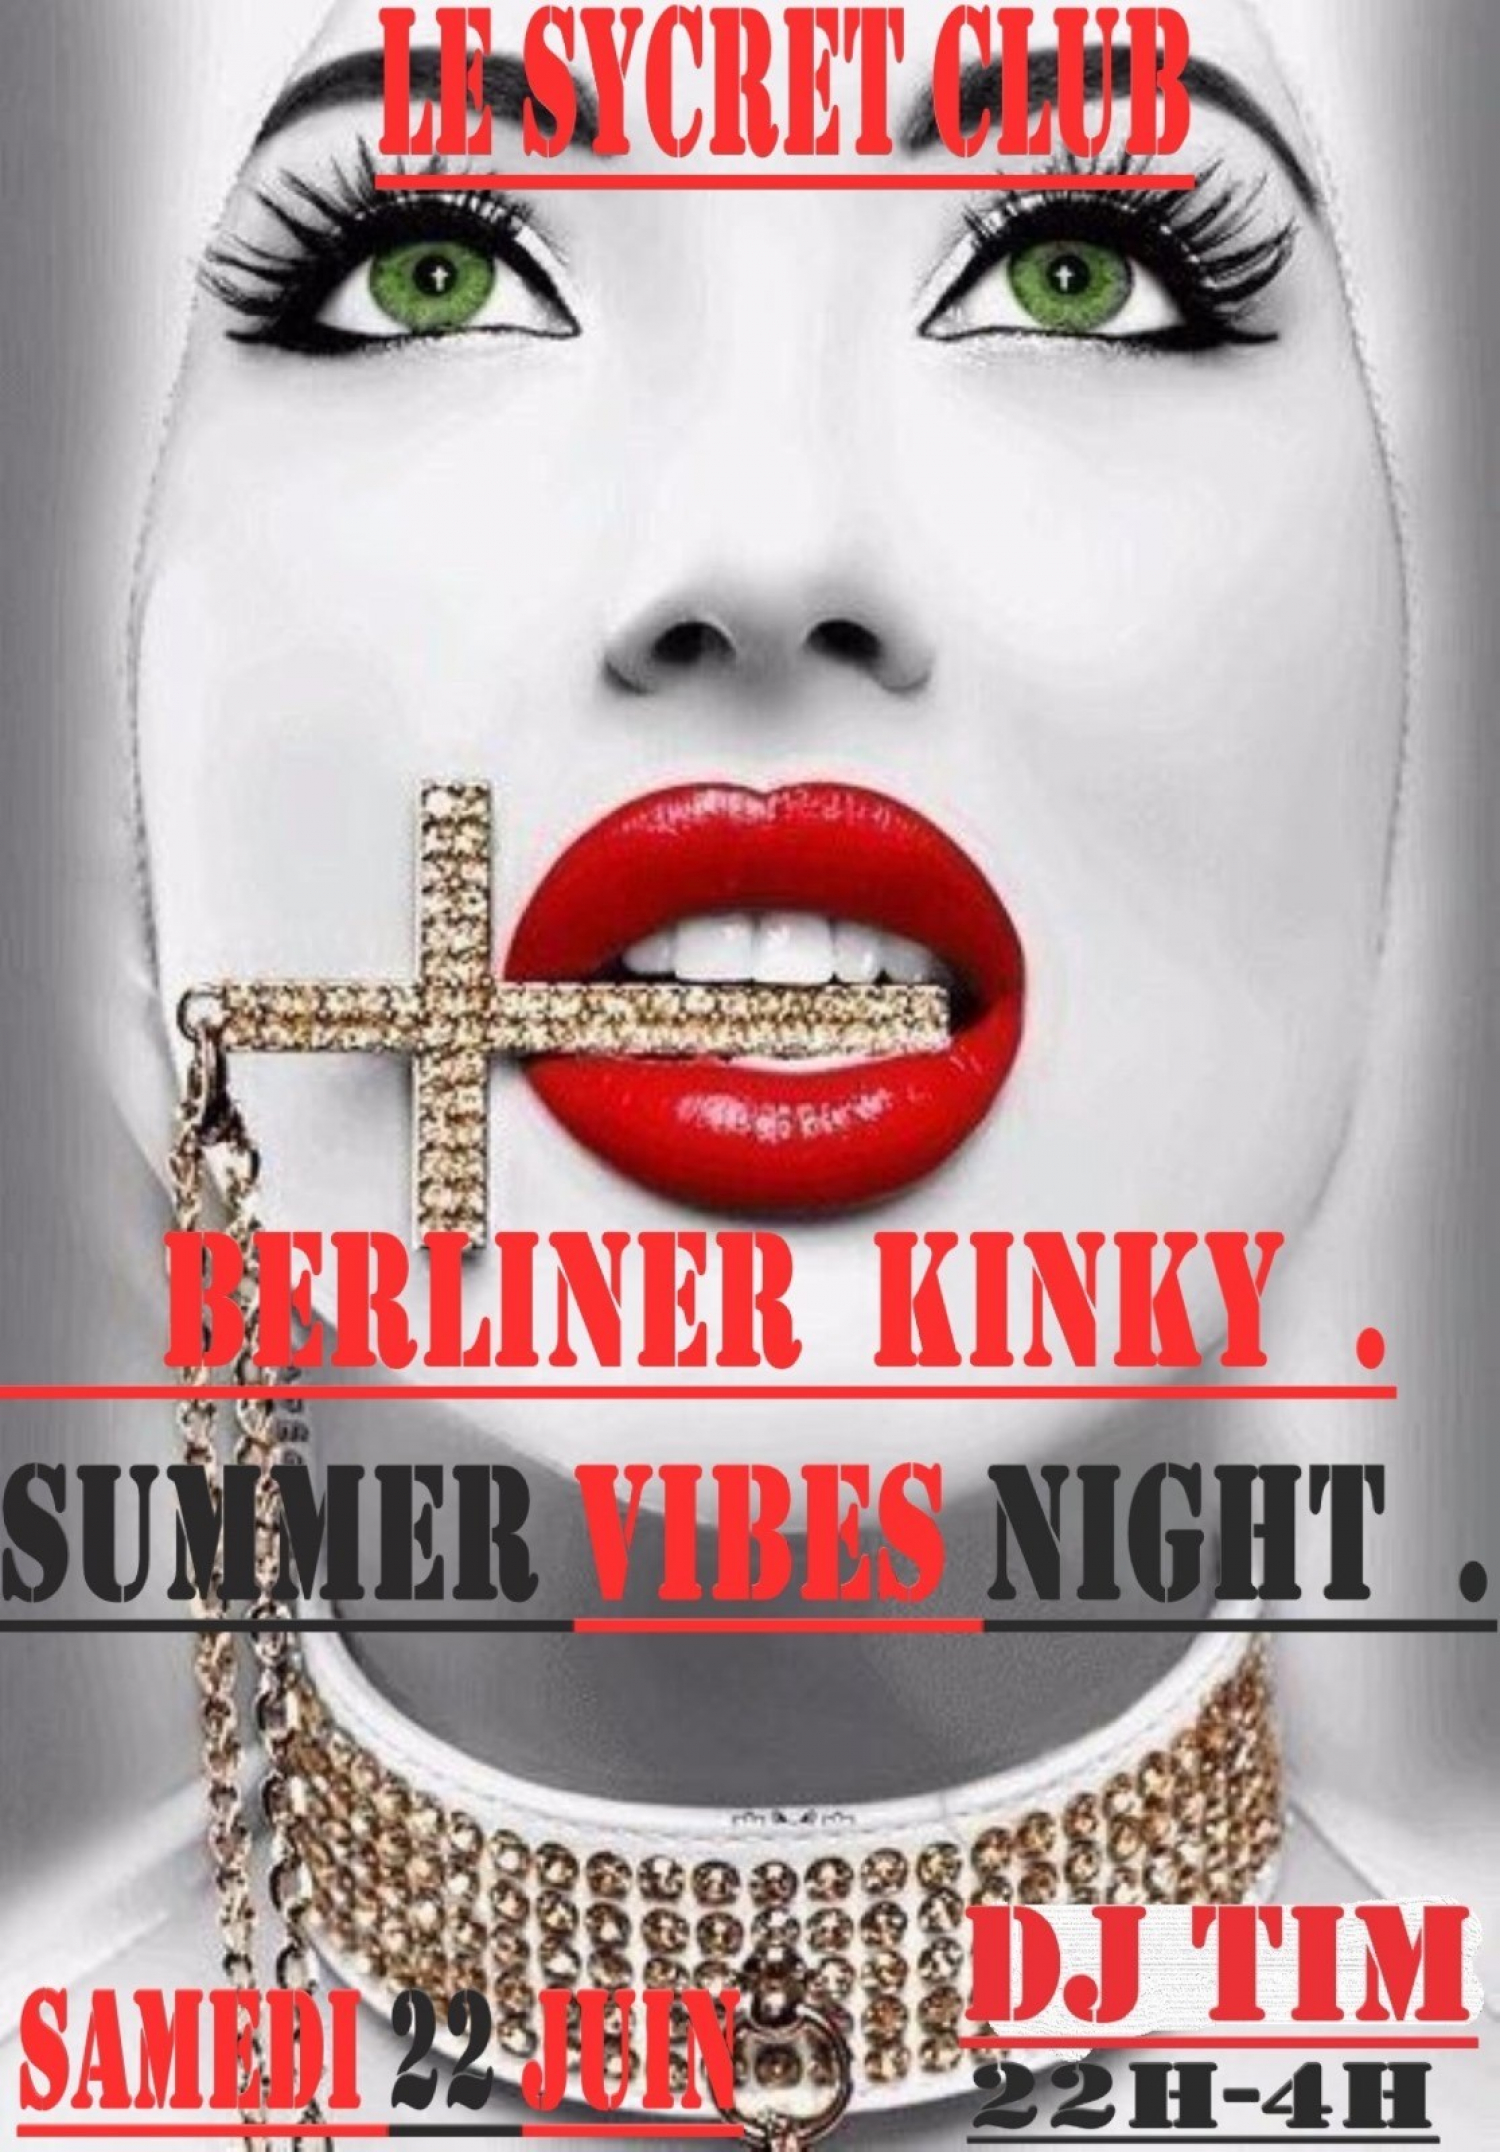 Berliner Kinky summer vibes night